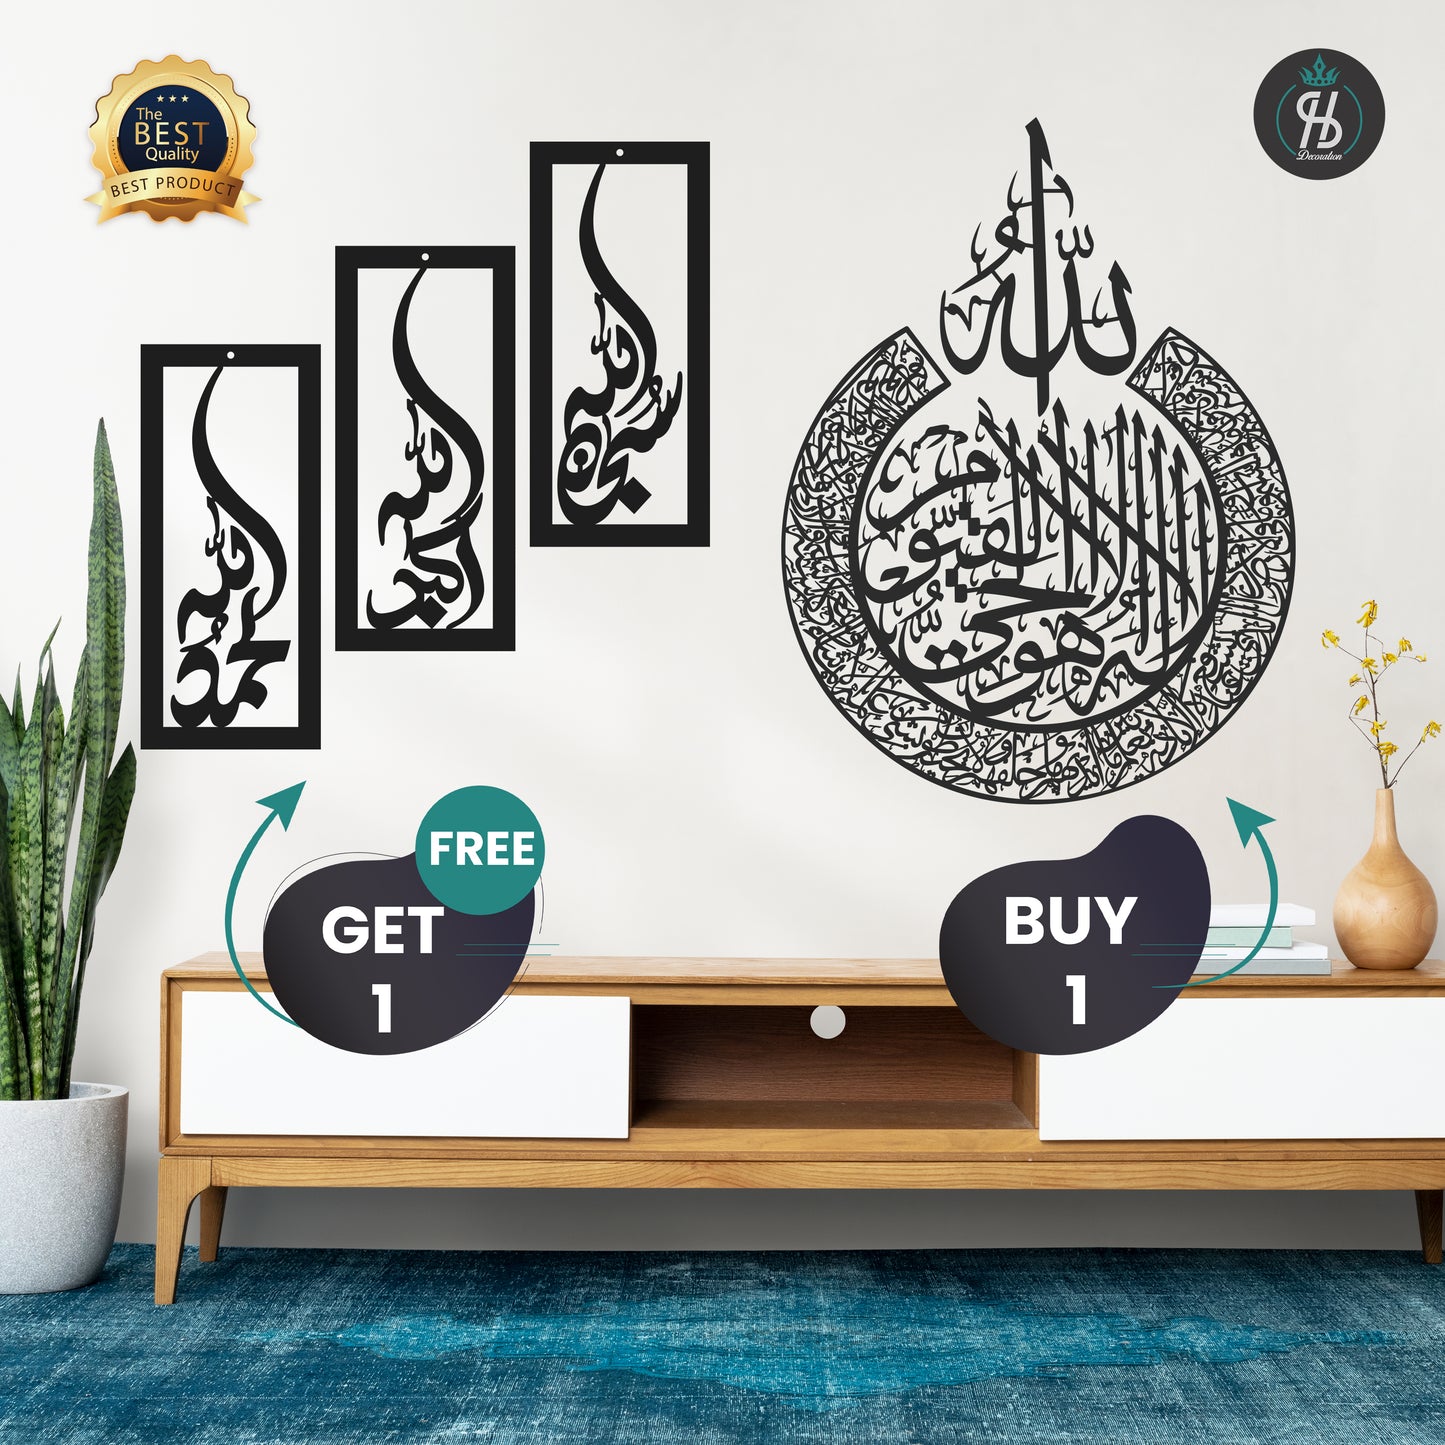 Ayatal Kursi & Tasbeeh e Fatima Vertical Calligraphy - Buy 1 Get 1 Free